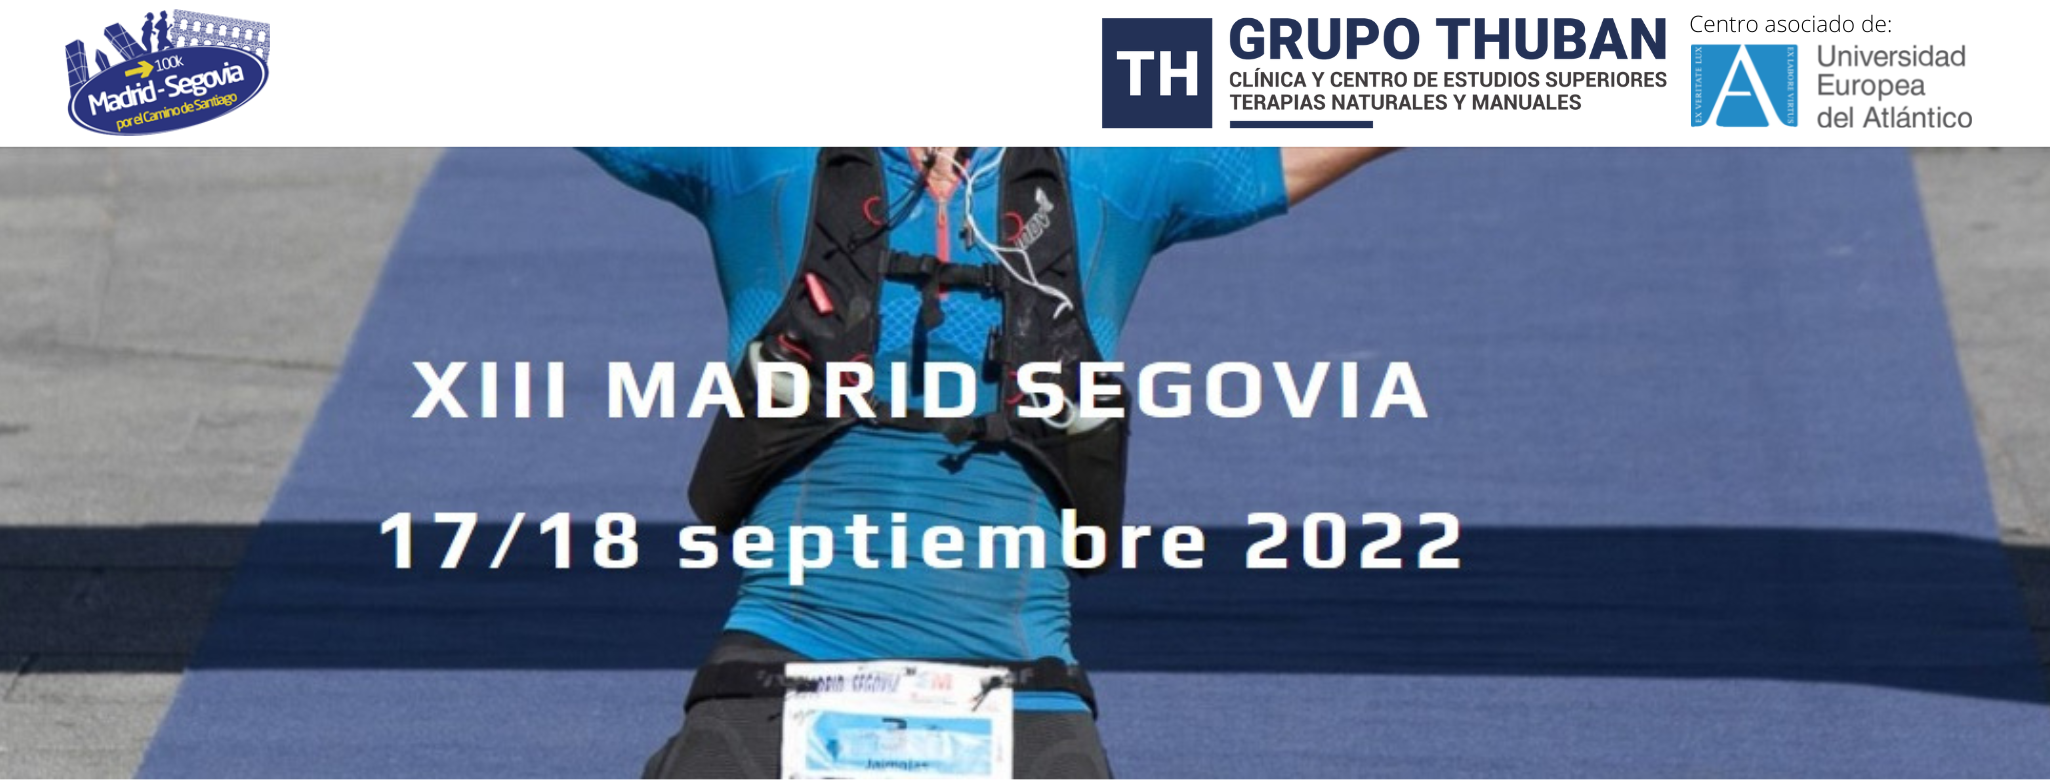 lb Inodoro Familiar XIII Madrid Segovia 2022 - Grupo Thuban